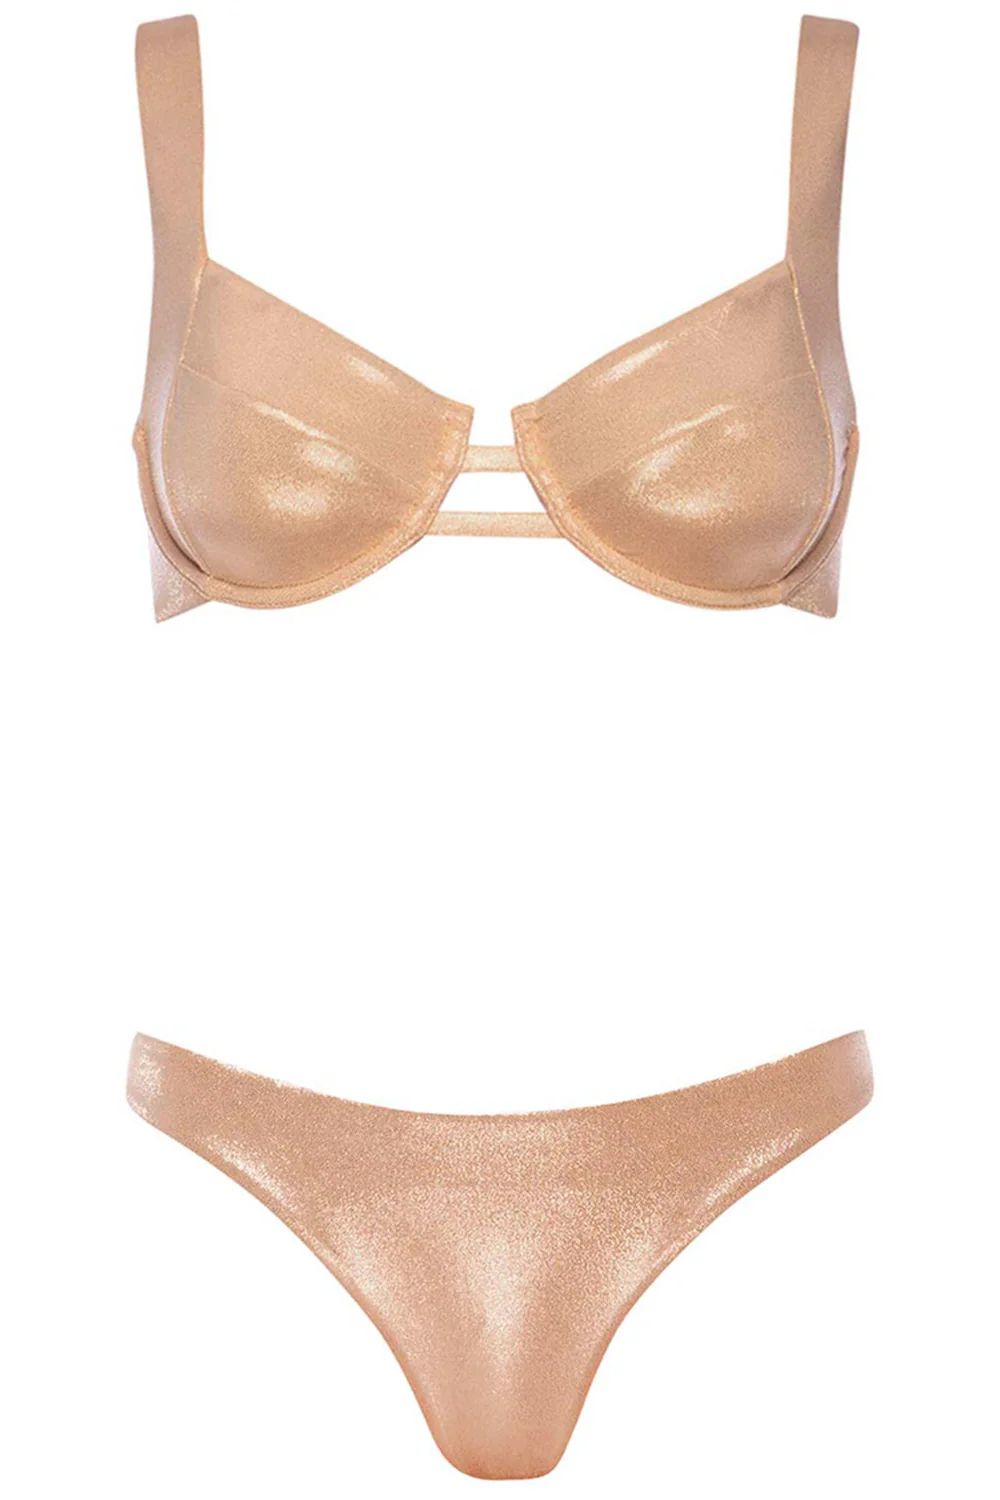 Margarita Bikini Gold Set | VETCHY